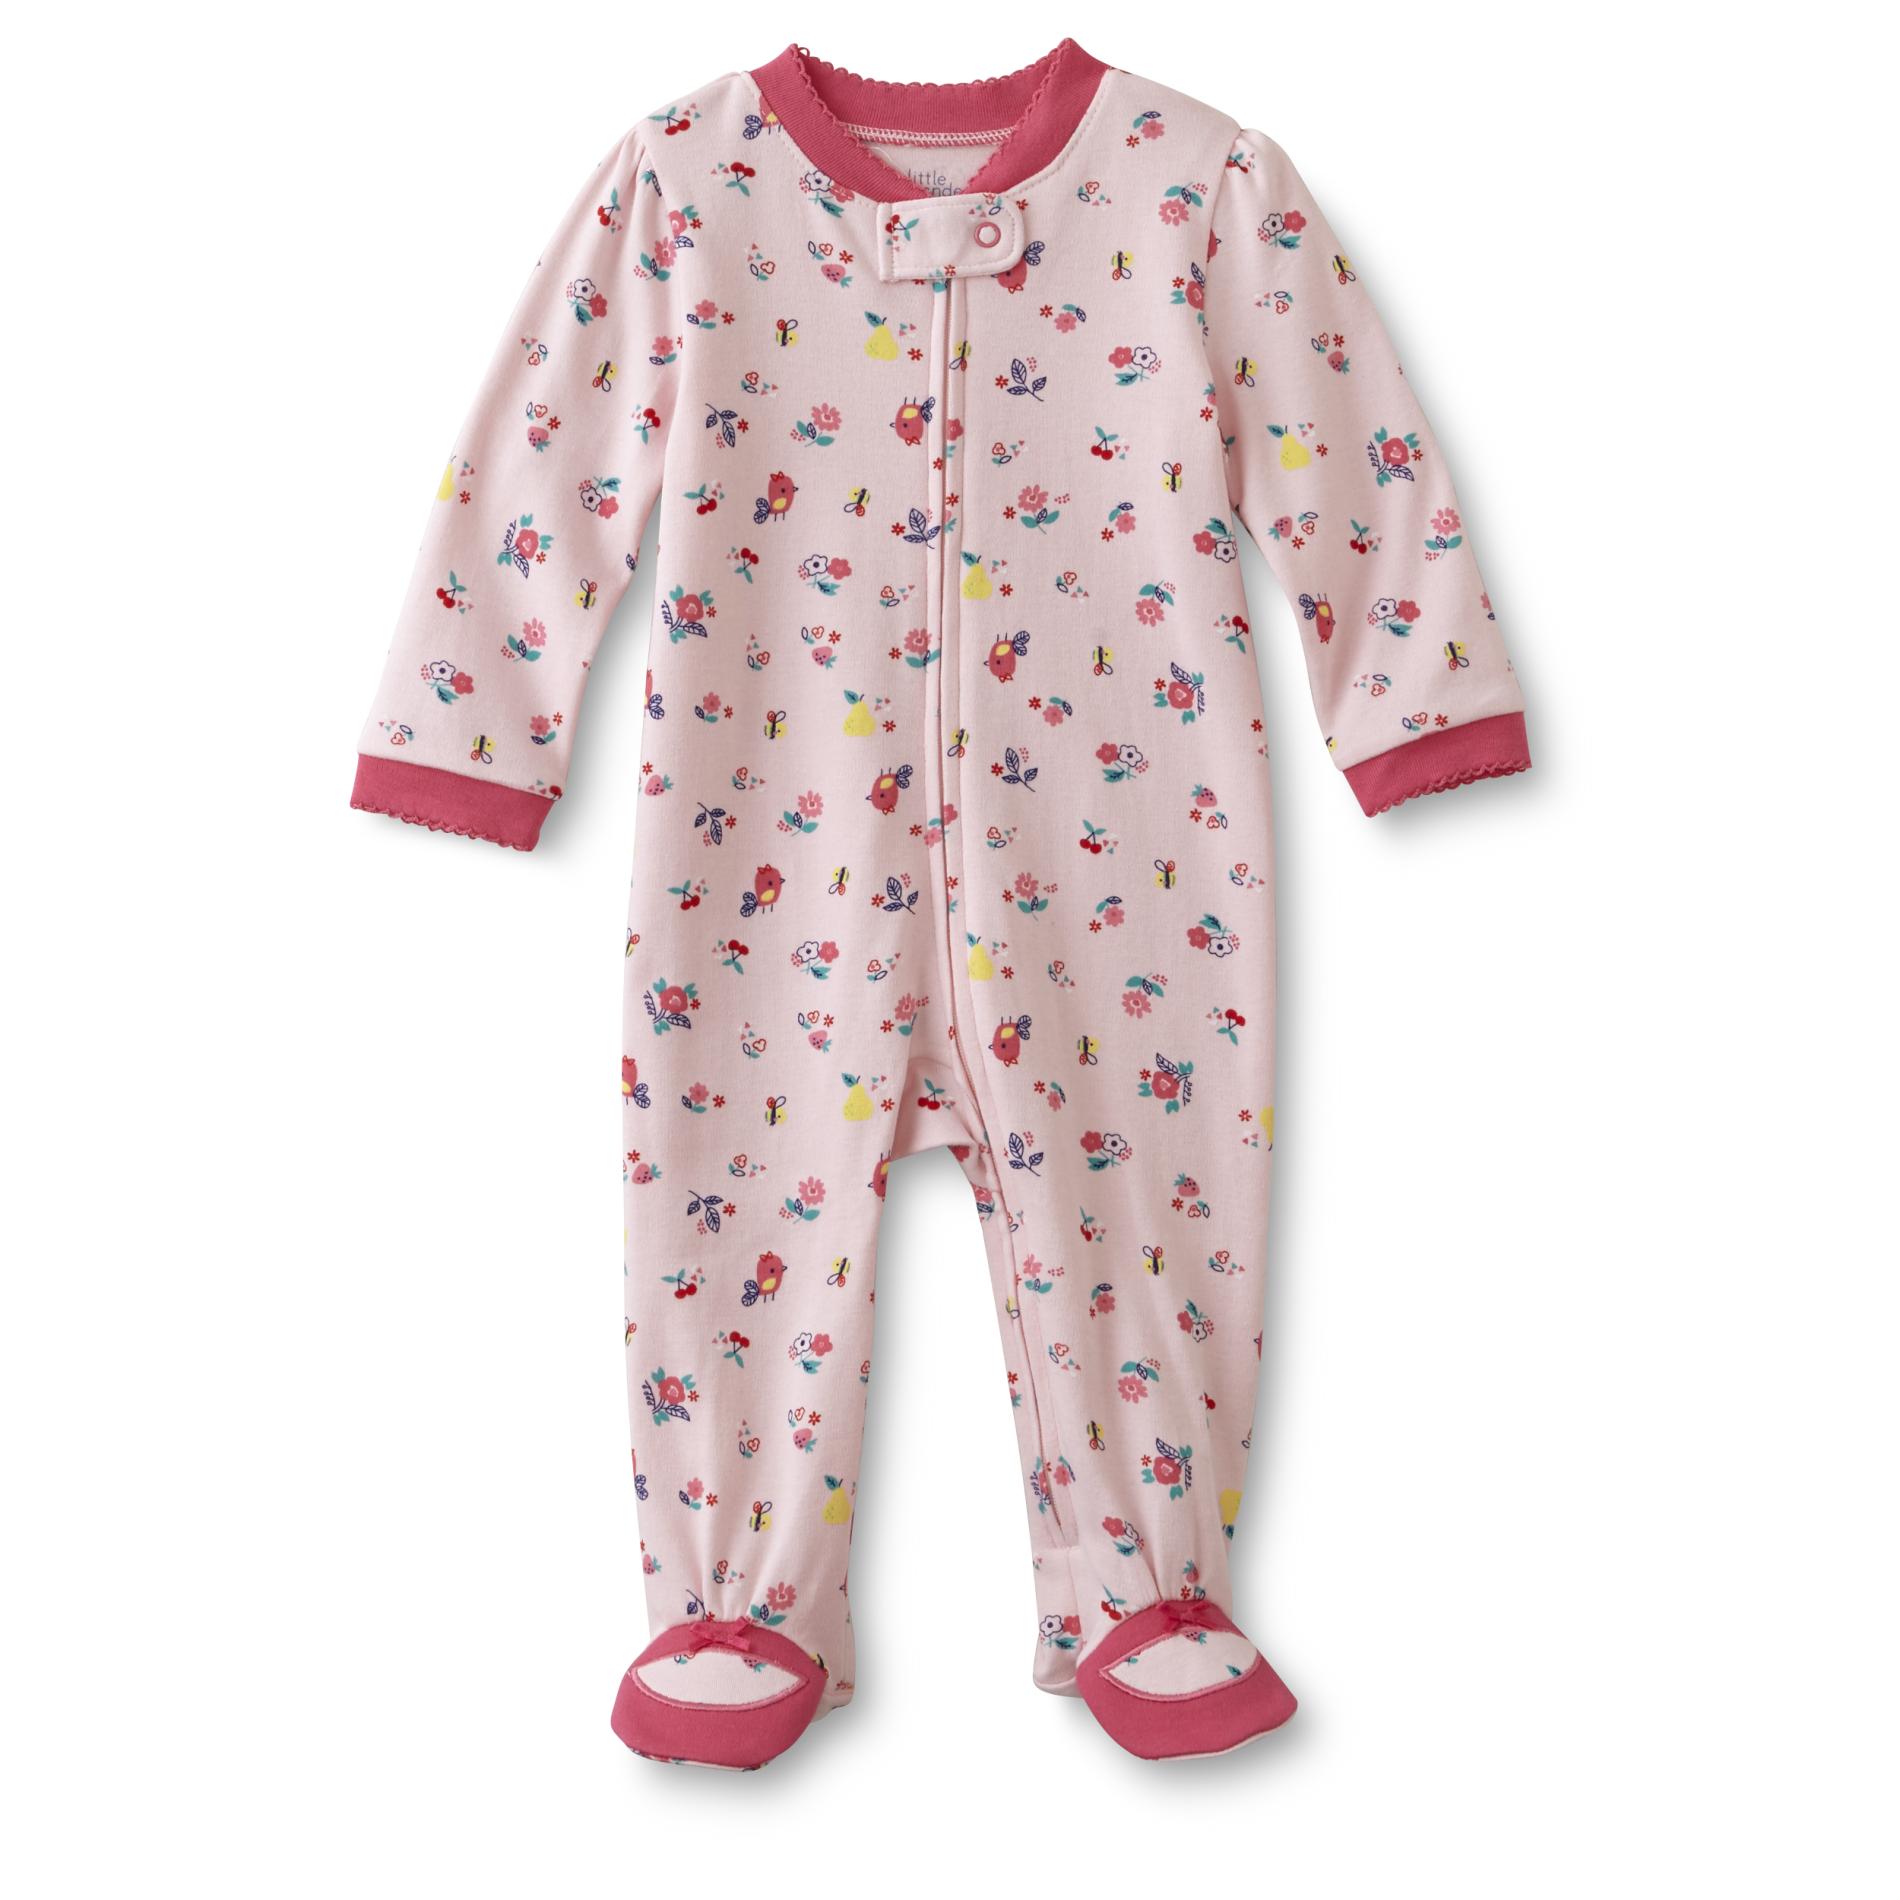 Little Wonders Newborn Girl's Footed Sleeper Pajamas - Flowers & Birds